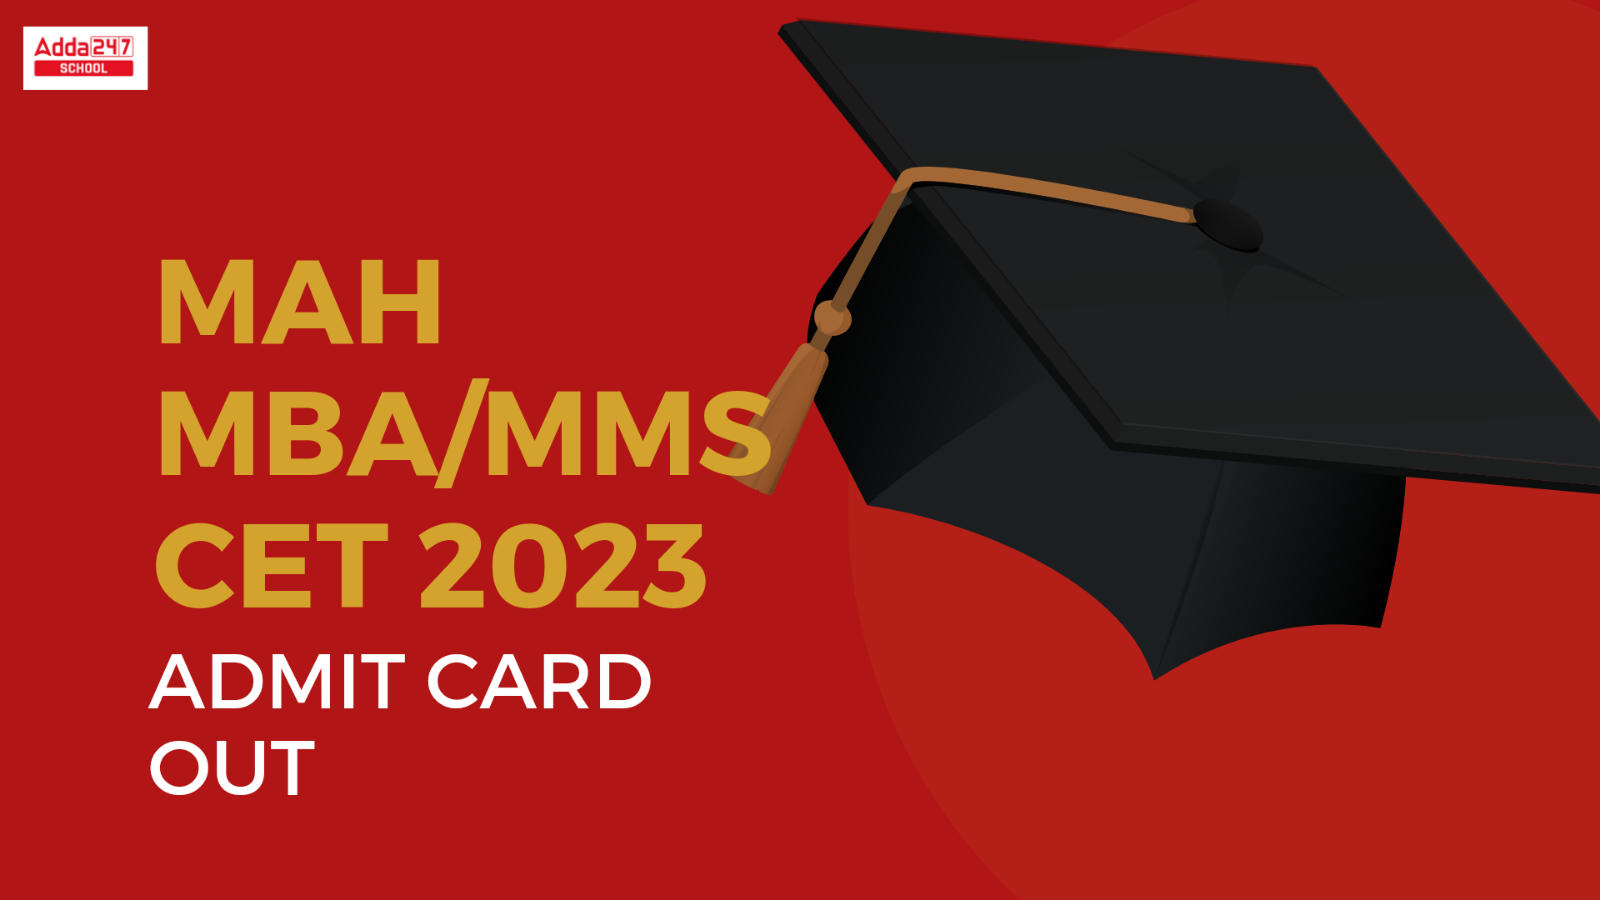 MAH MBA MMS CET Admit Card 2023